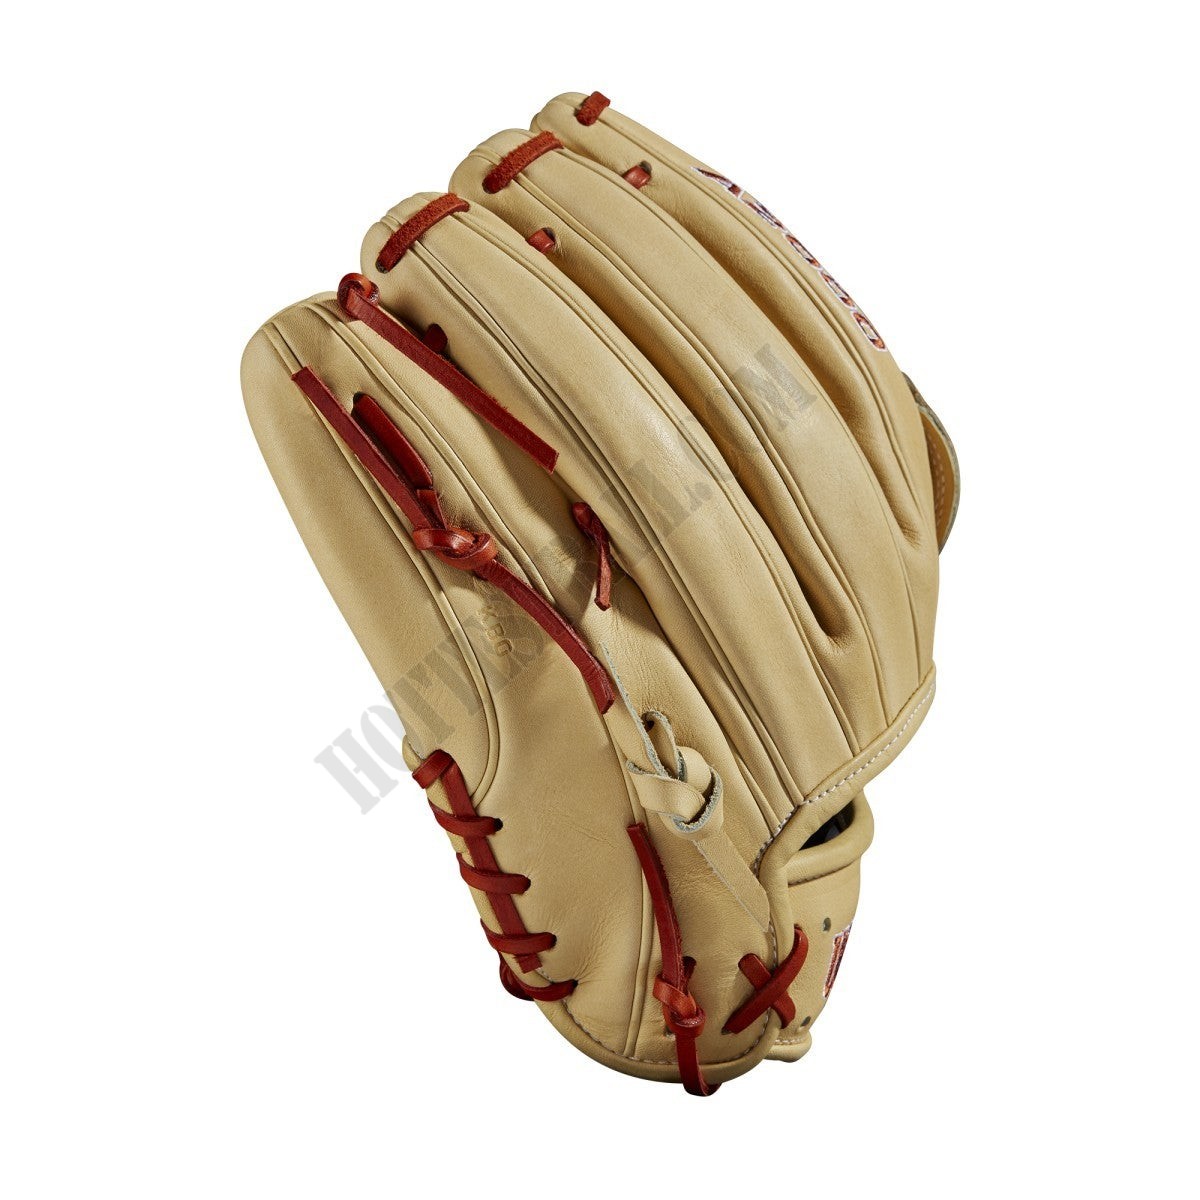 2021 A2000 PP05 11.5" Infield Baseball Glove ● Wilson Promotions - -4